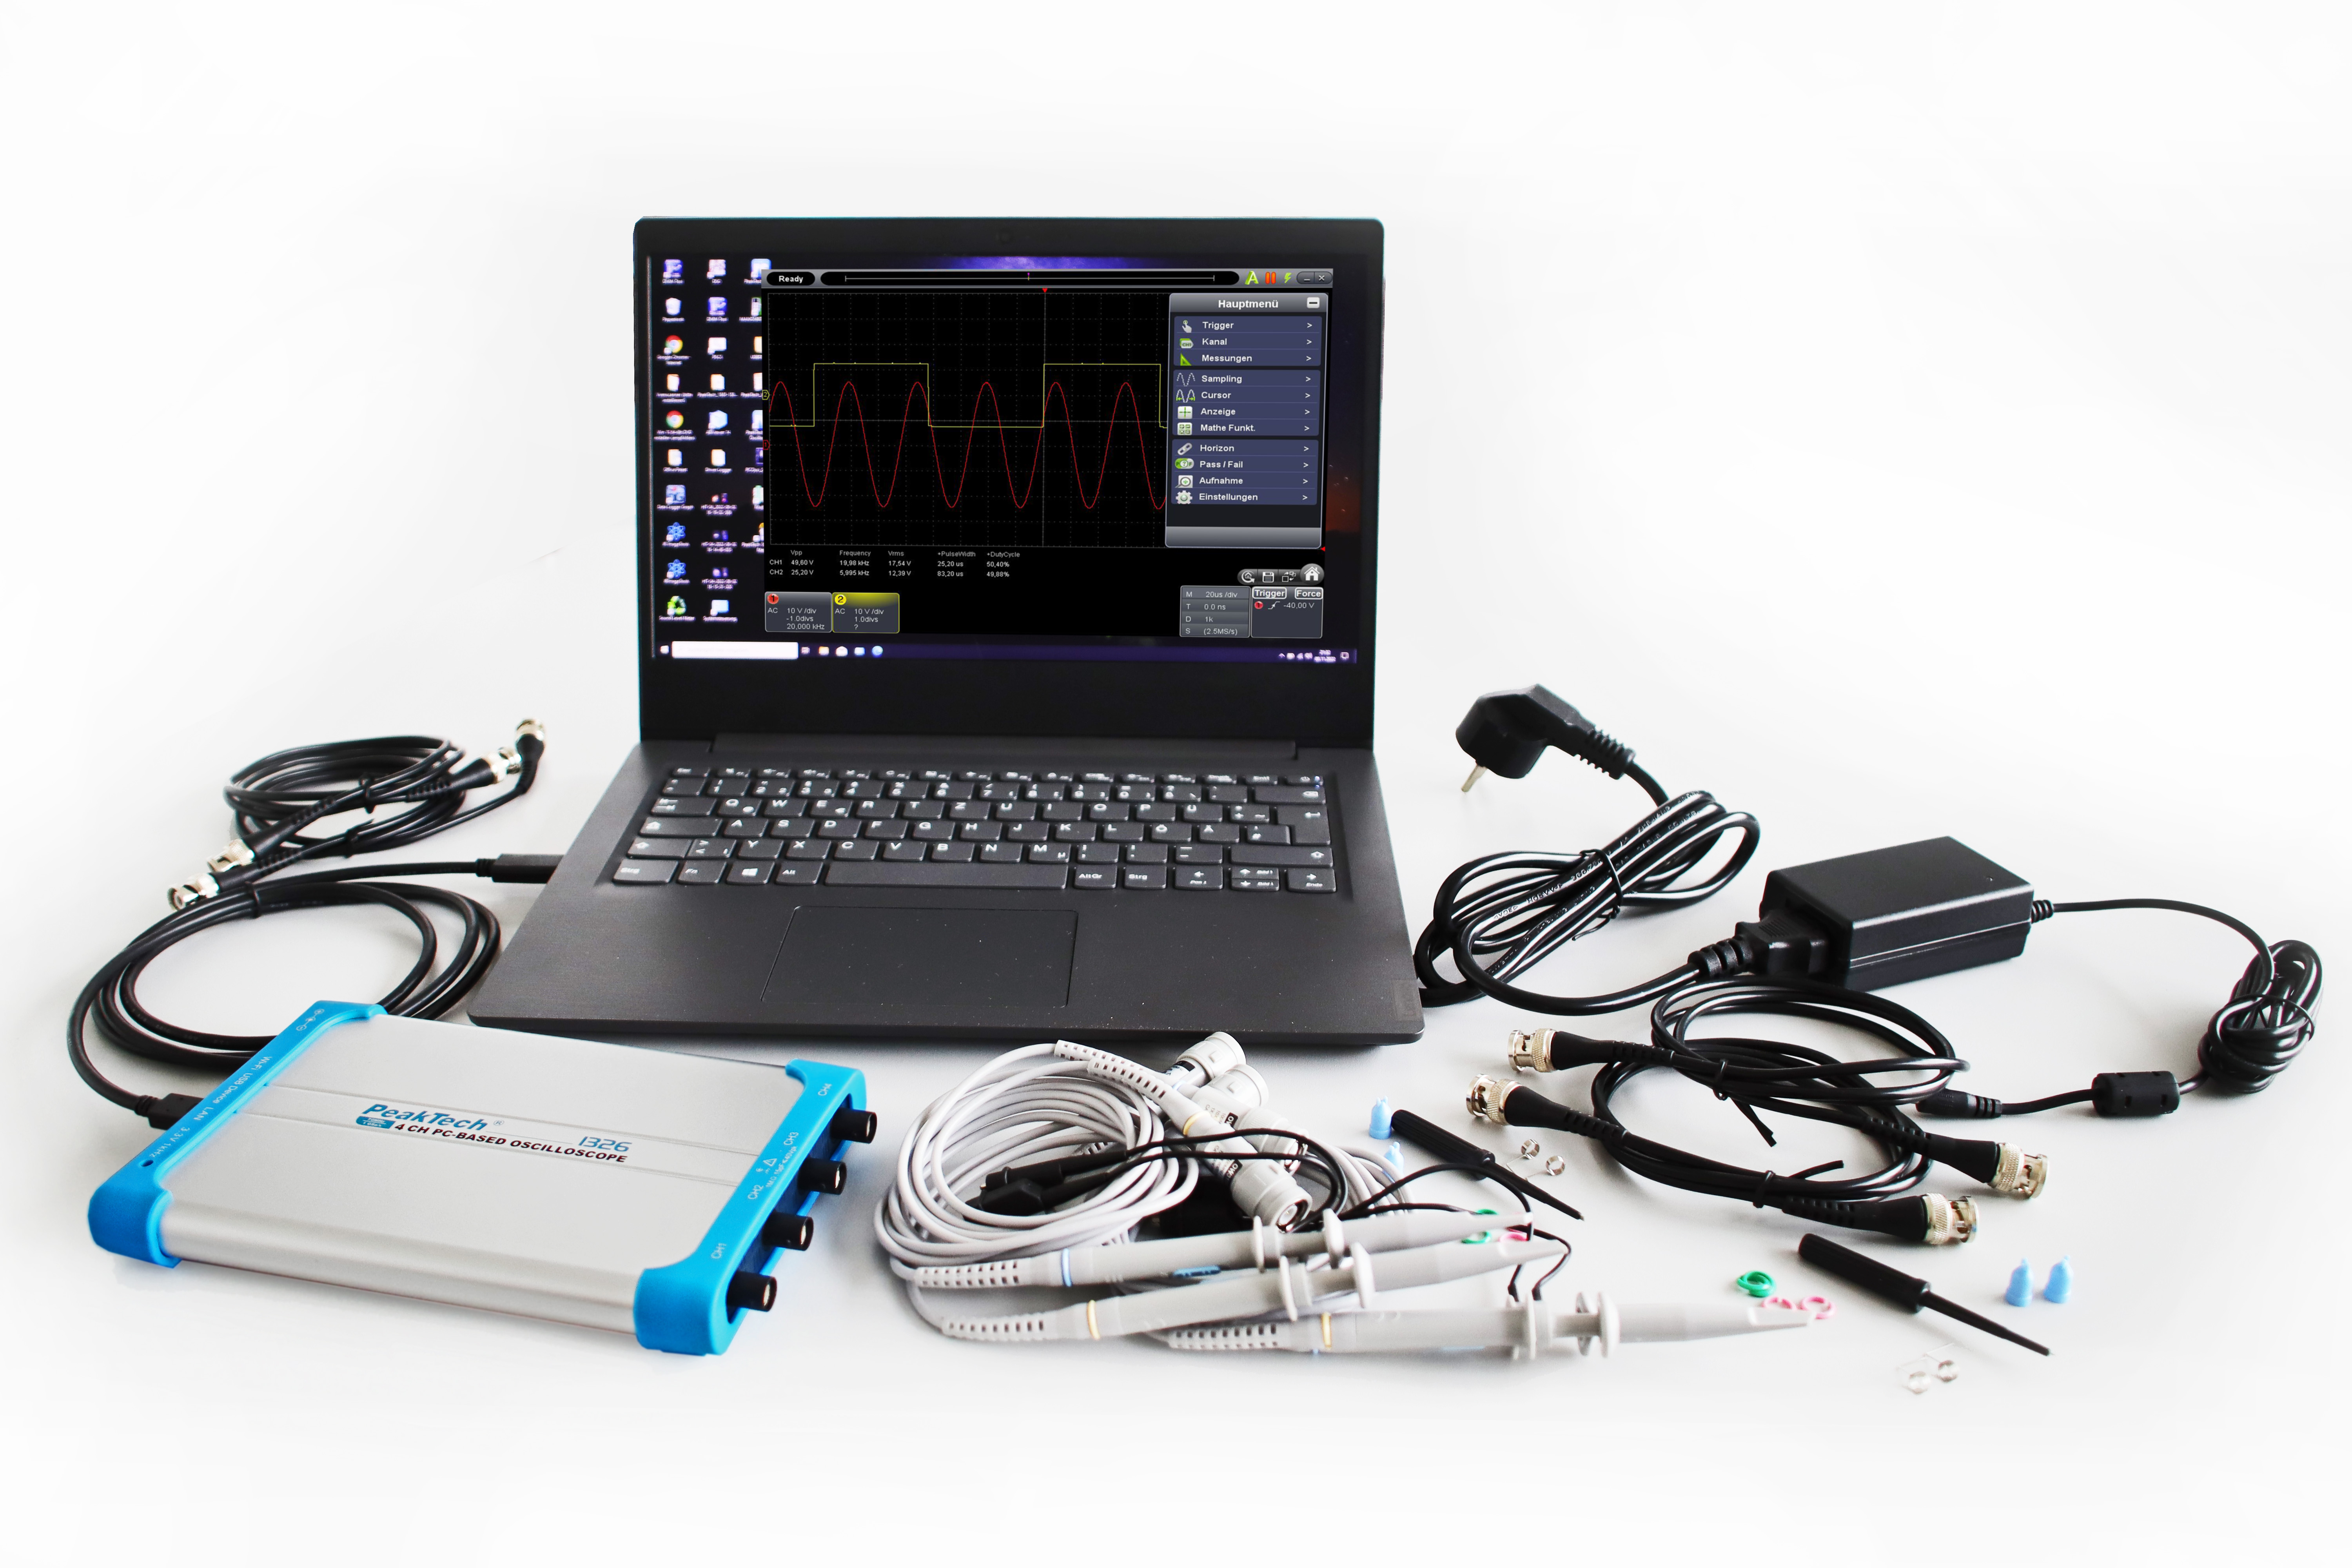 «PeakTech® P 1326» 70 MHz / 4 CH, 1 GS/s PC oscilloscope, USB & LAN